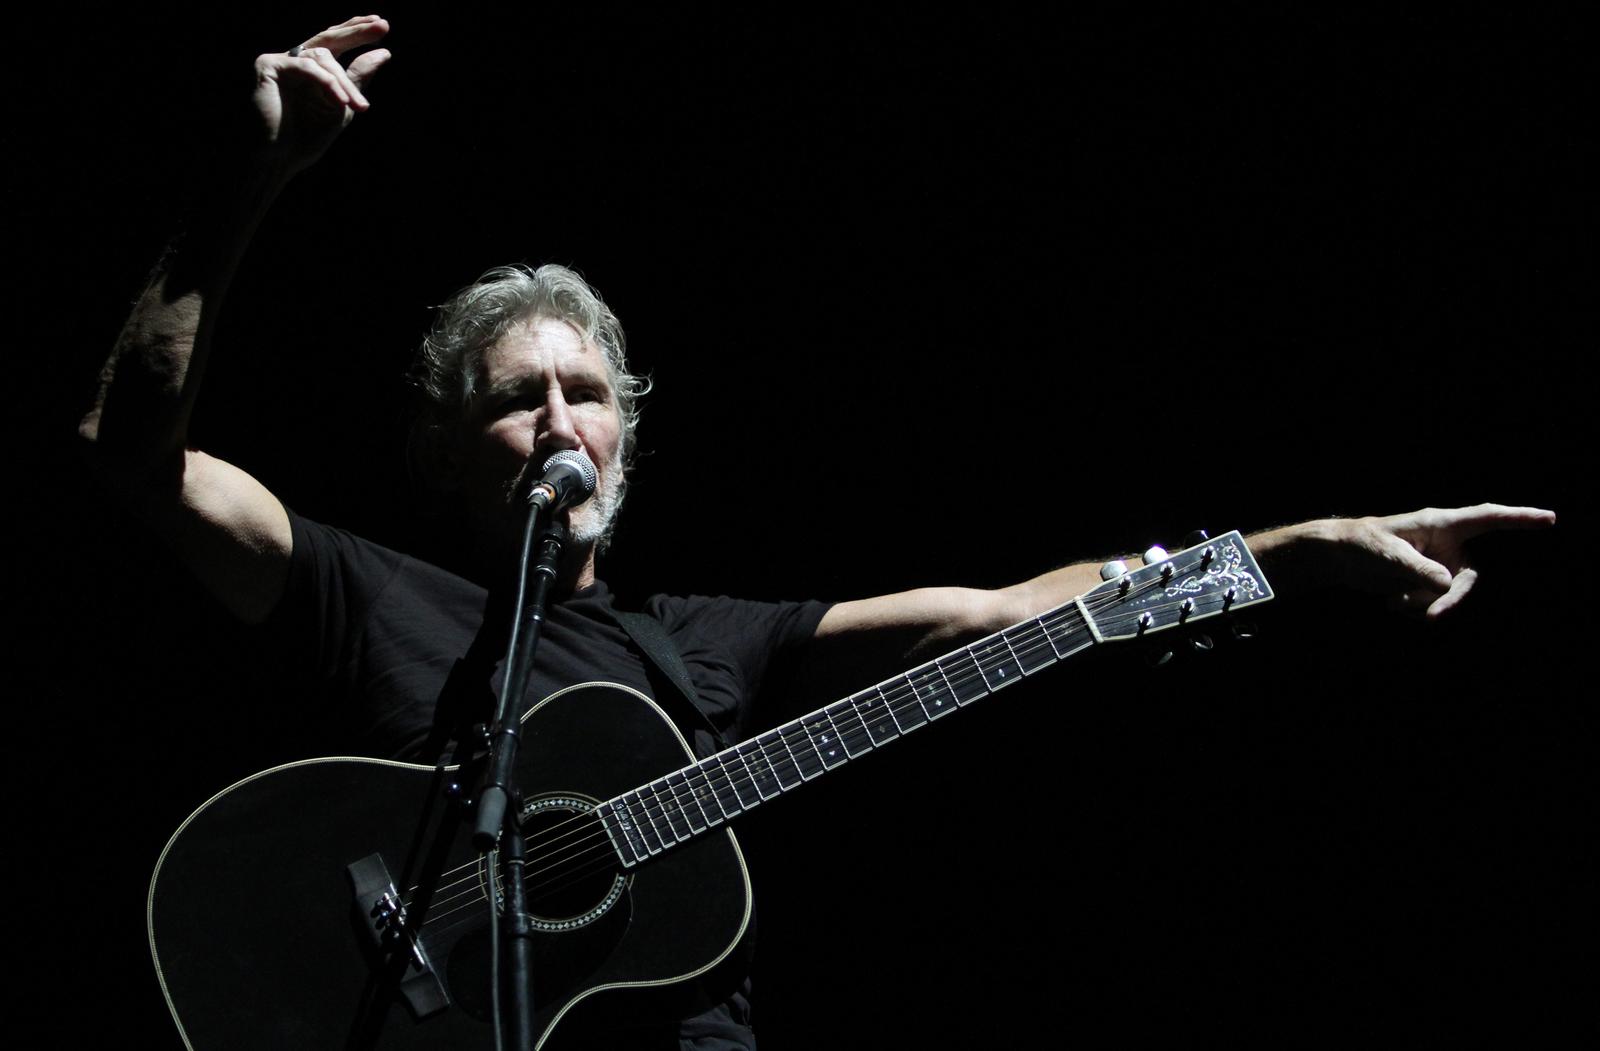 23.07.2013., stadion Poljud, Split - Roger Waters odrzao koncert u sklopu turneje The Wall. Photo: Ivana Ivanovic/PIXSELL